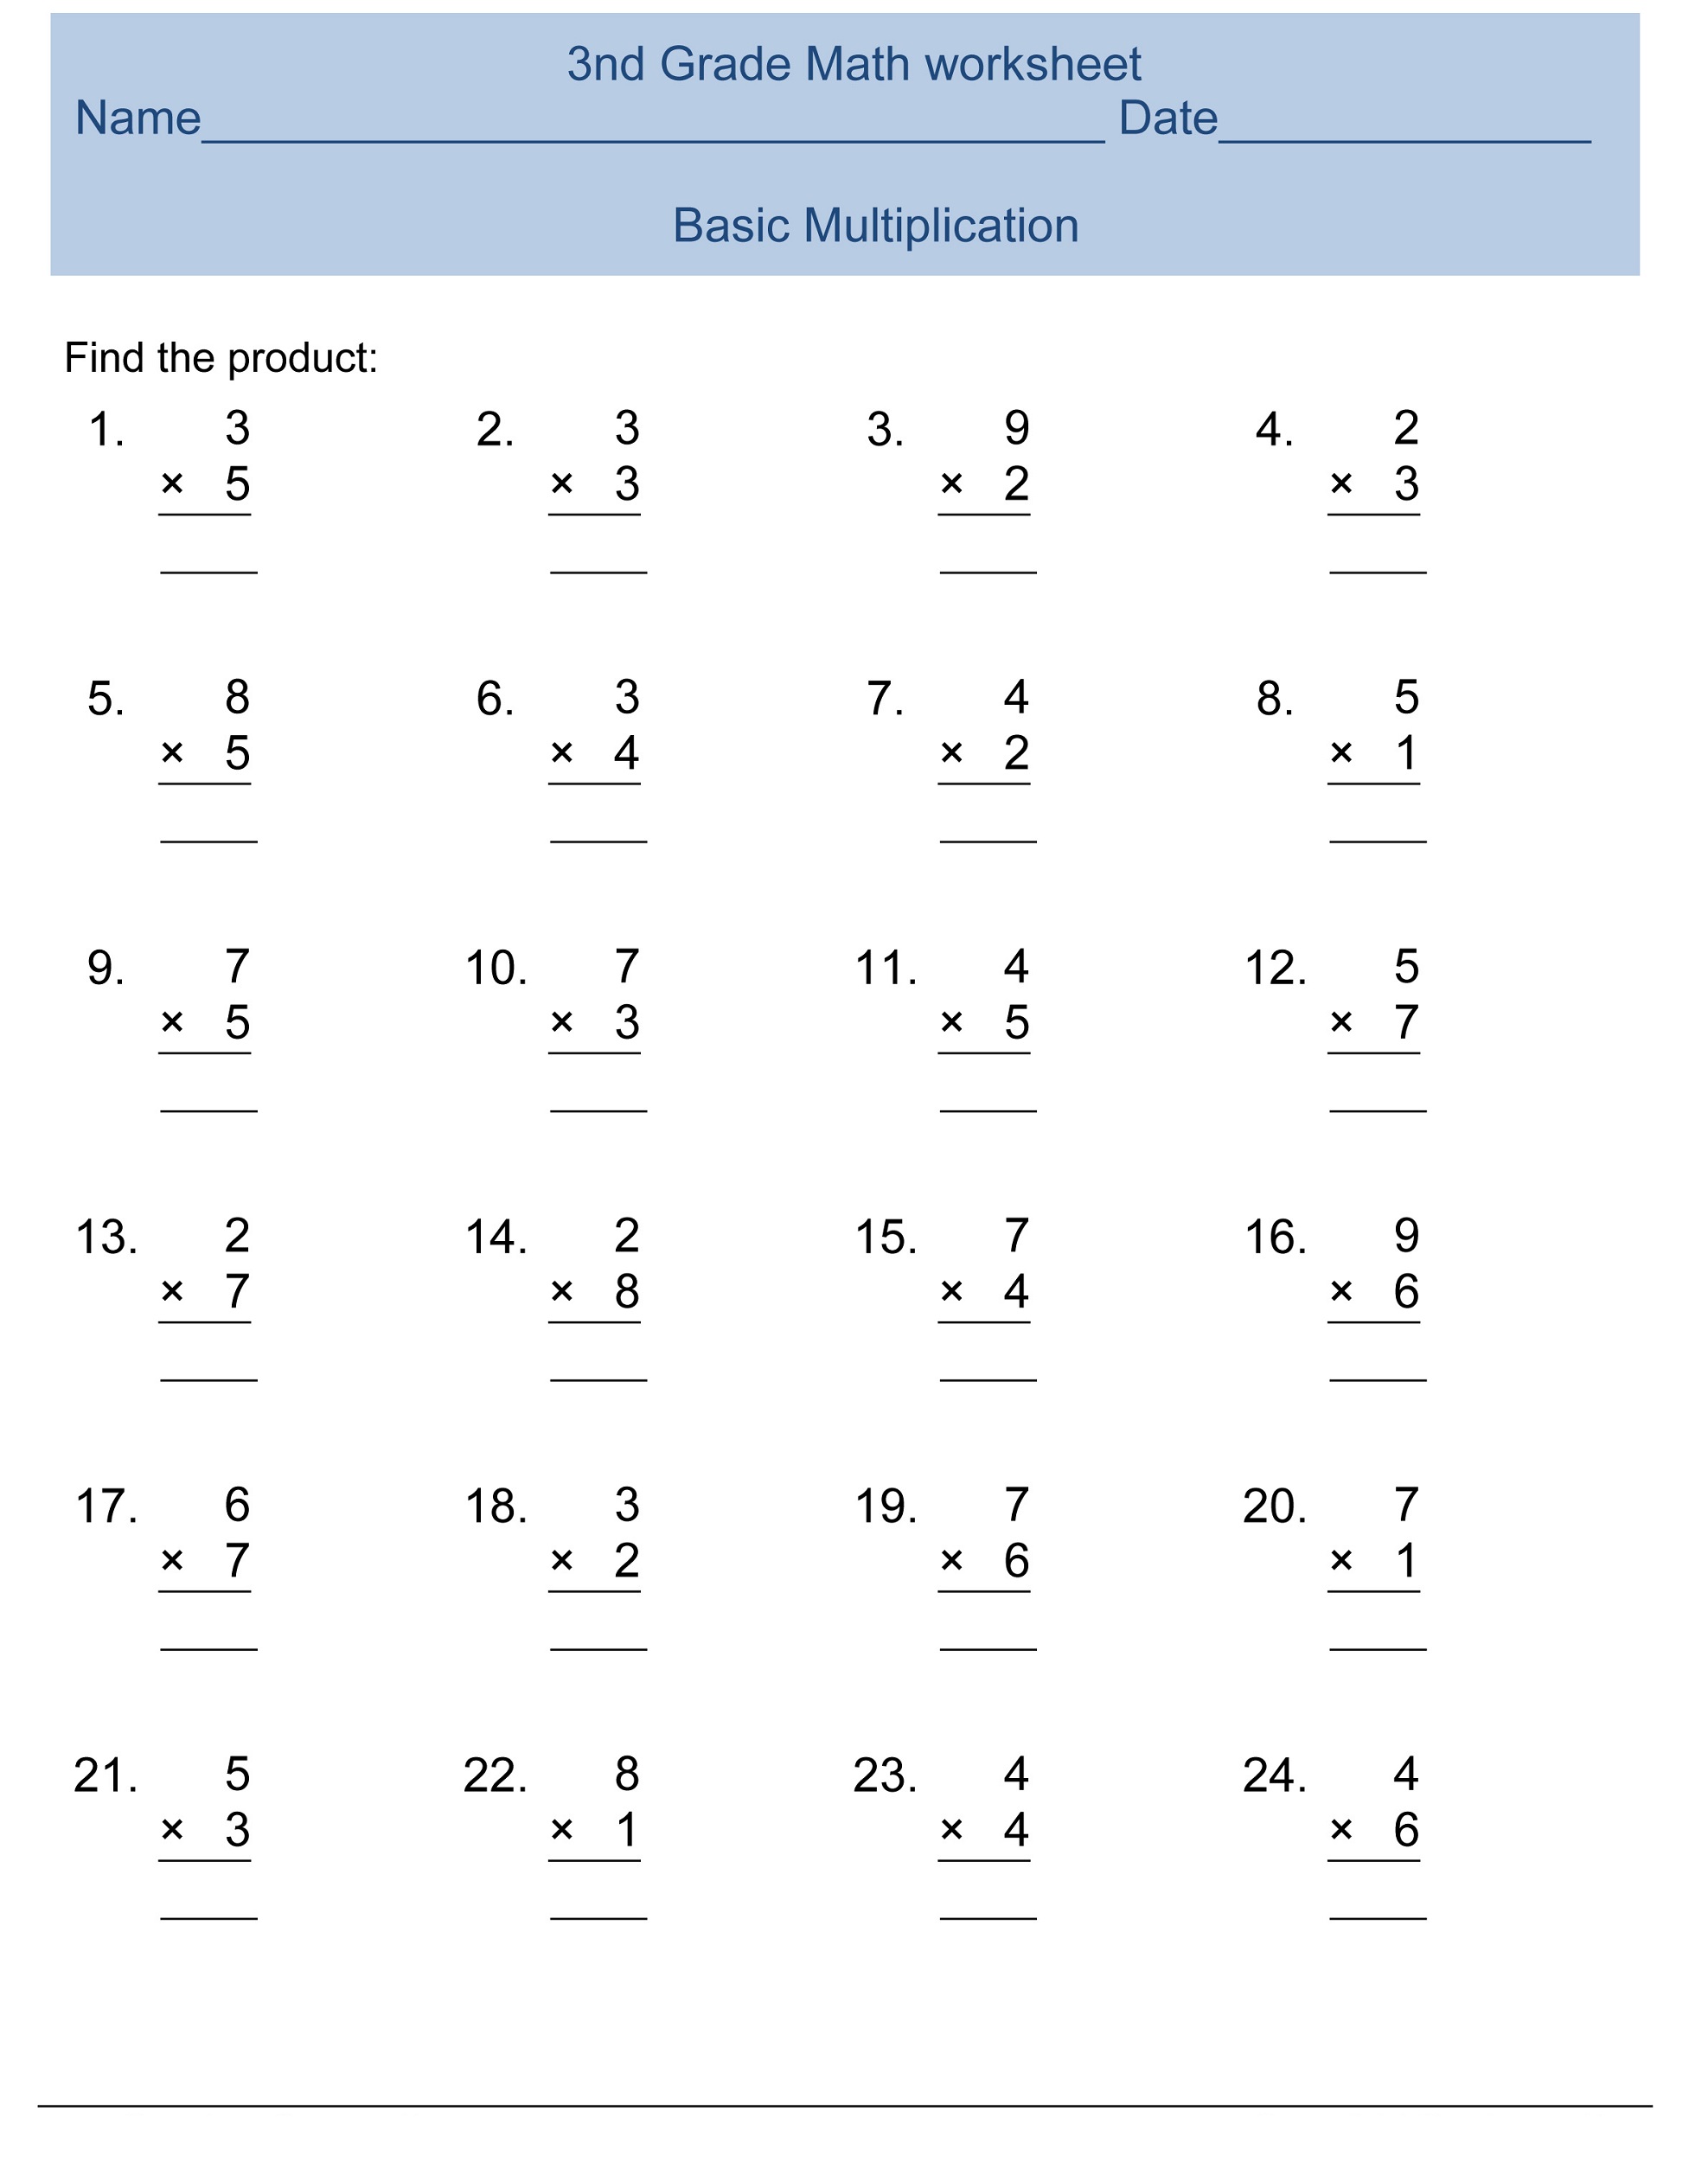 3rd grade math worksheet pdf